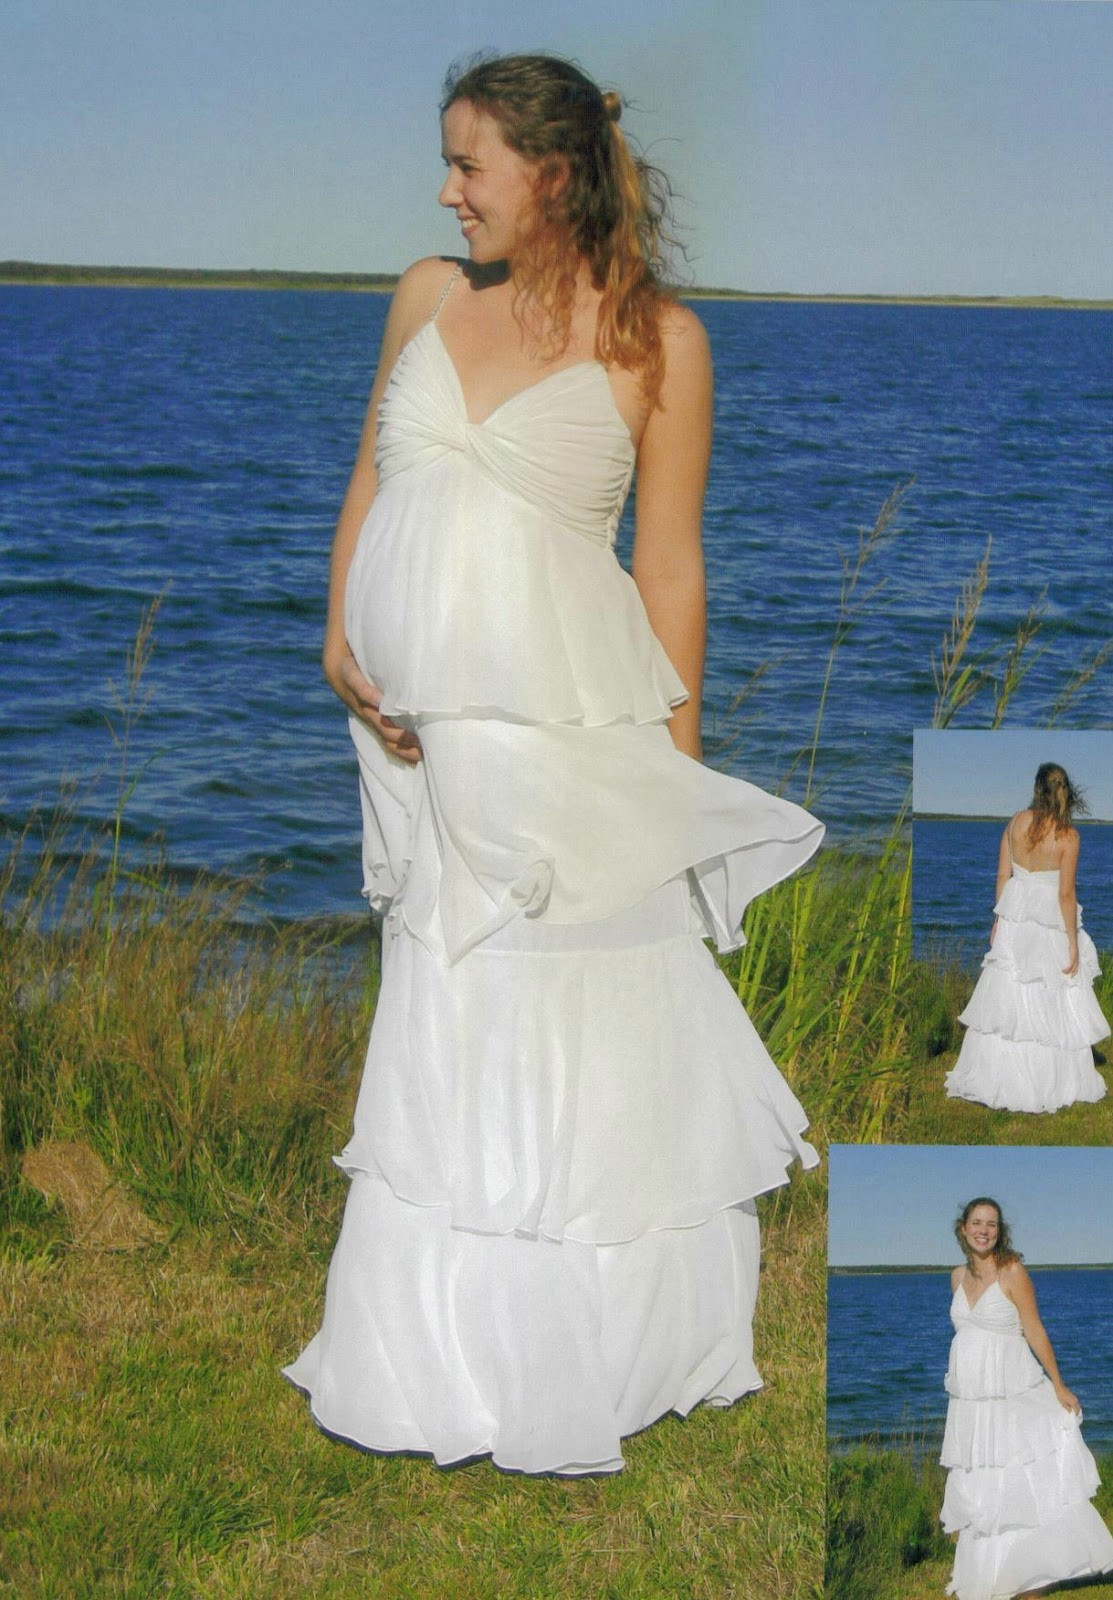 Maternity Dresses For A Wedding
 WhiteAzalea Maternity Dresses Are You Ready for a Maternity Autumn Wedding